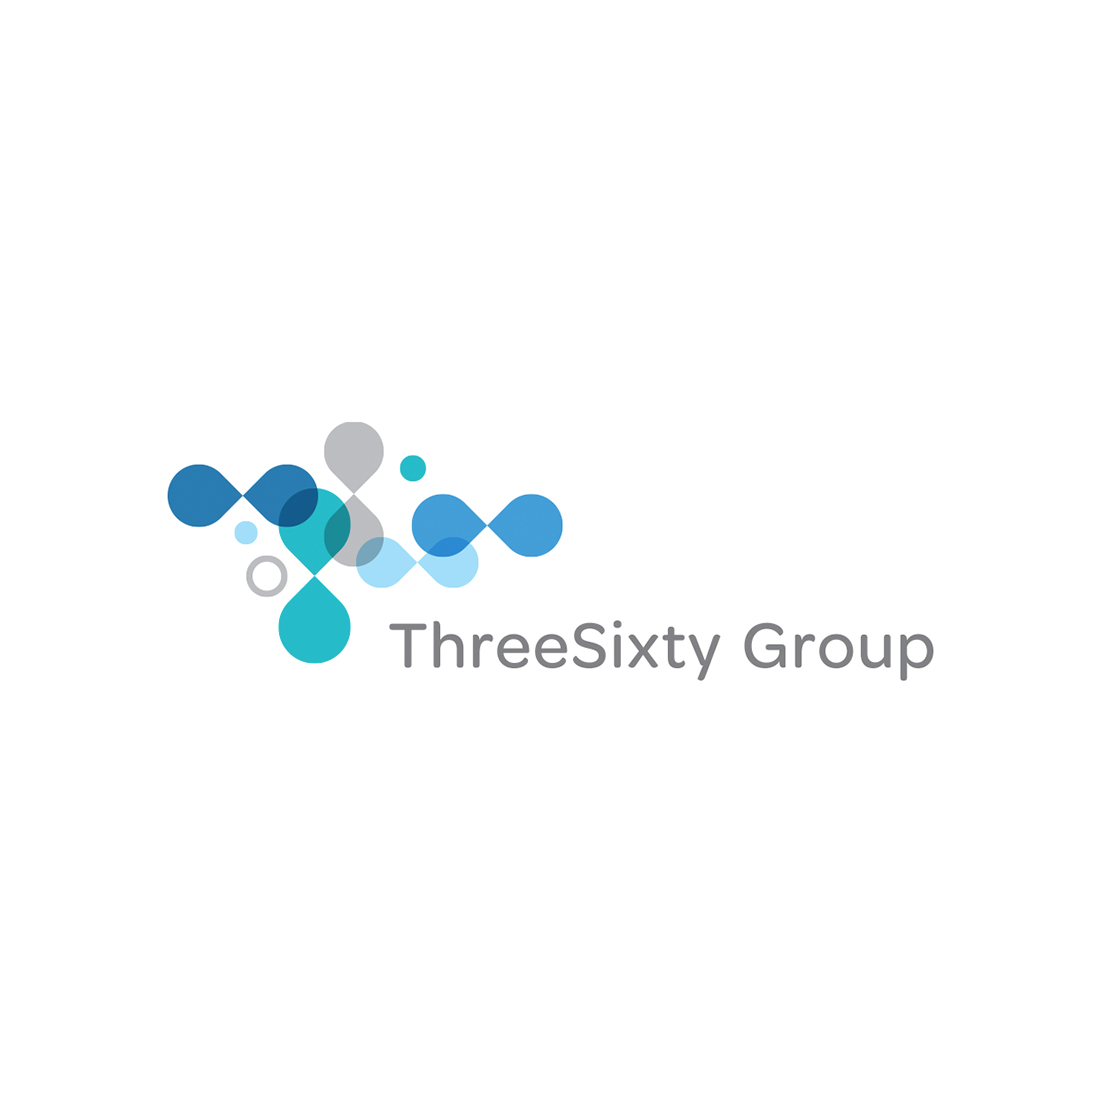 ThreeSixty Group